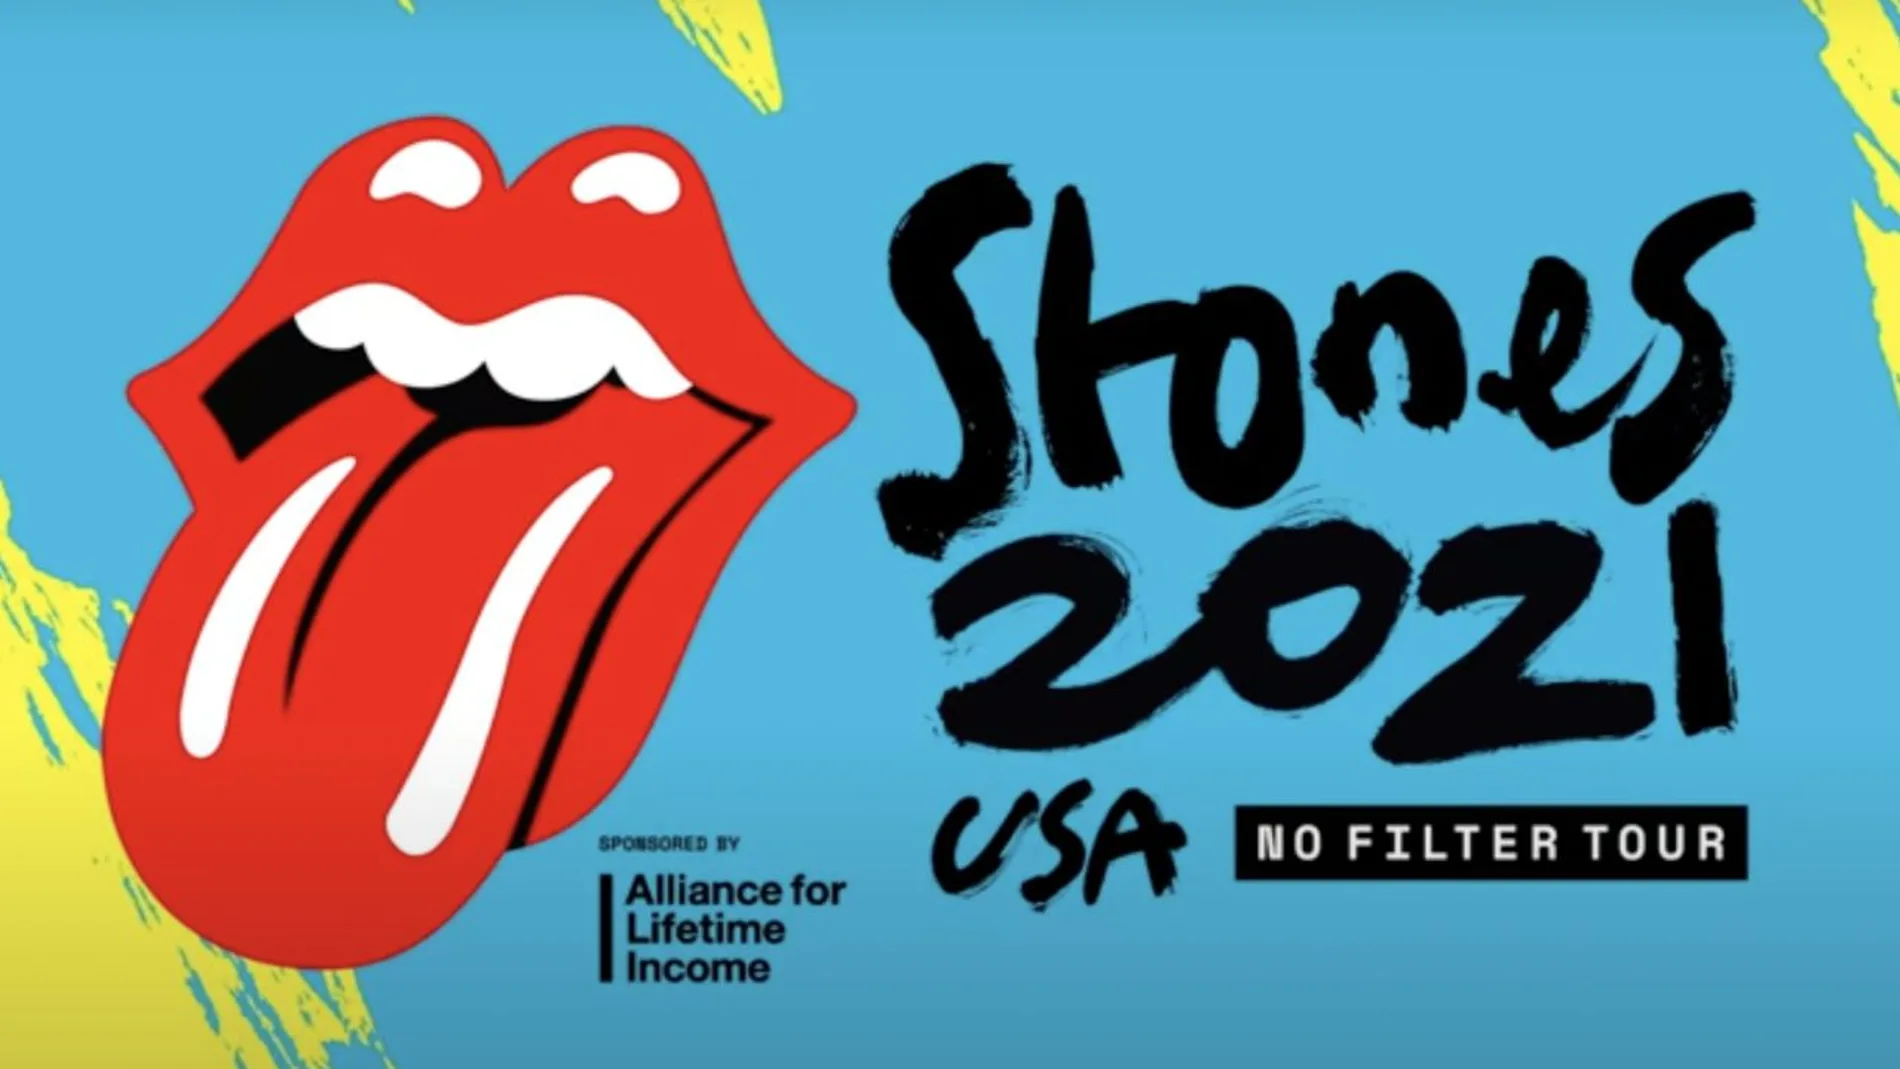 Los Rolling Stones retoman su gira americana